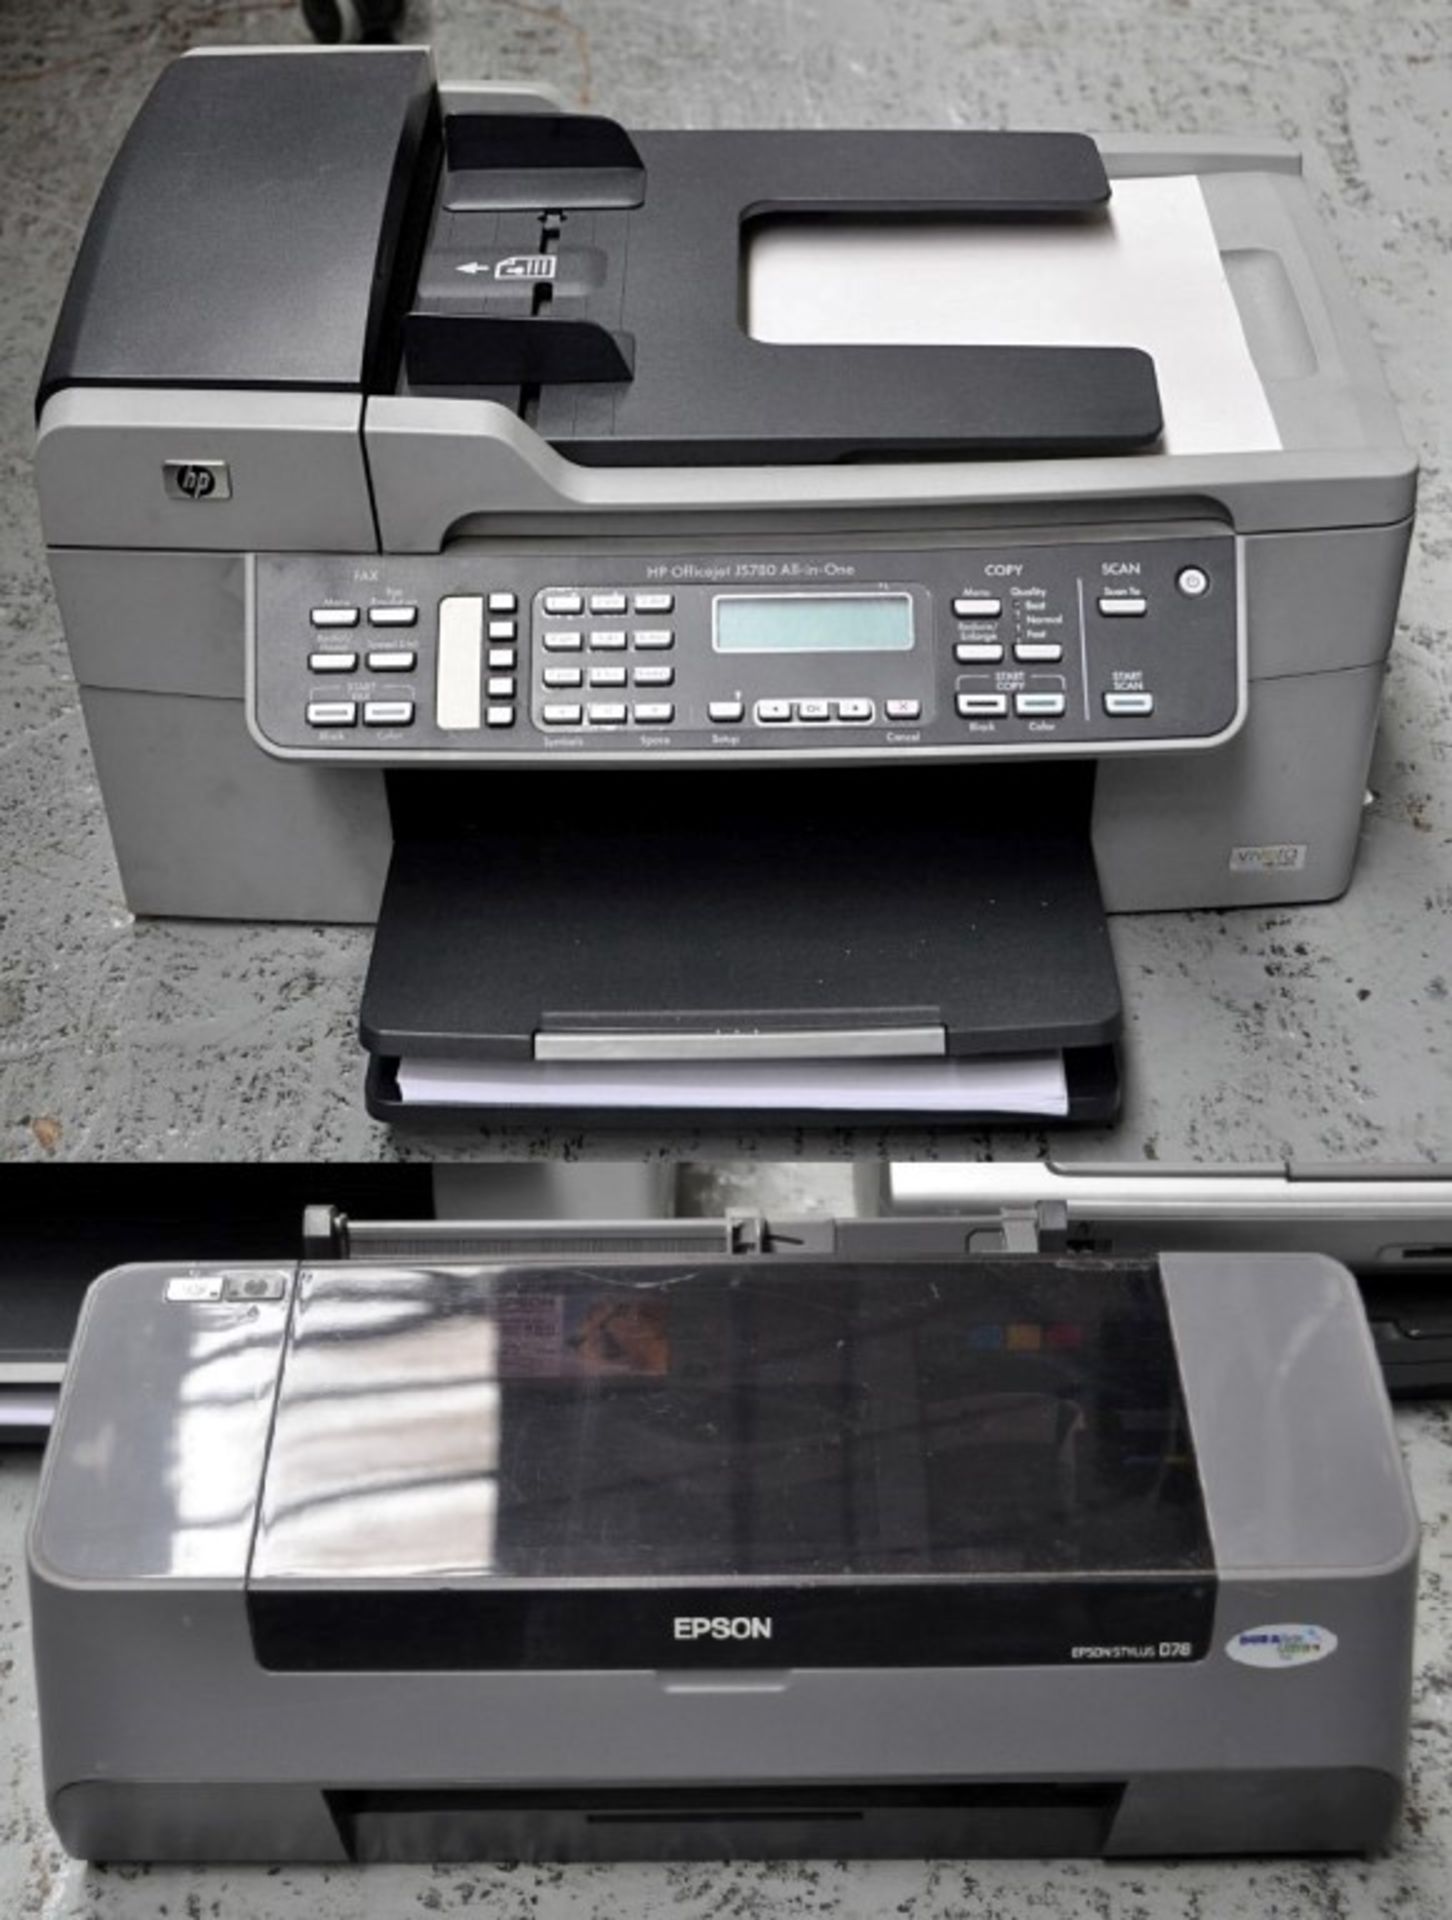 2 x Office Printers - Lot Includes: 1 x HP Officejet JS780 & 1 x Epson Stylus D78 - Taken From A